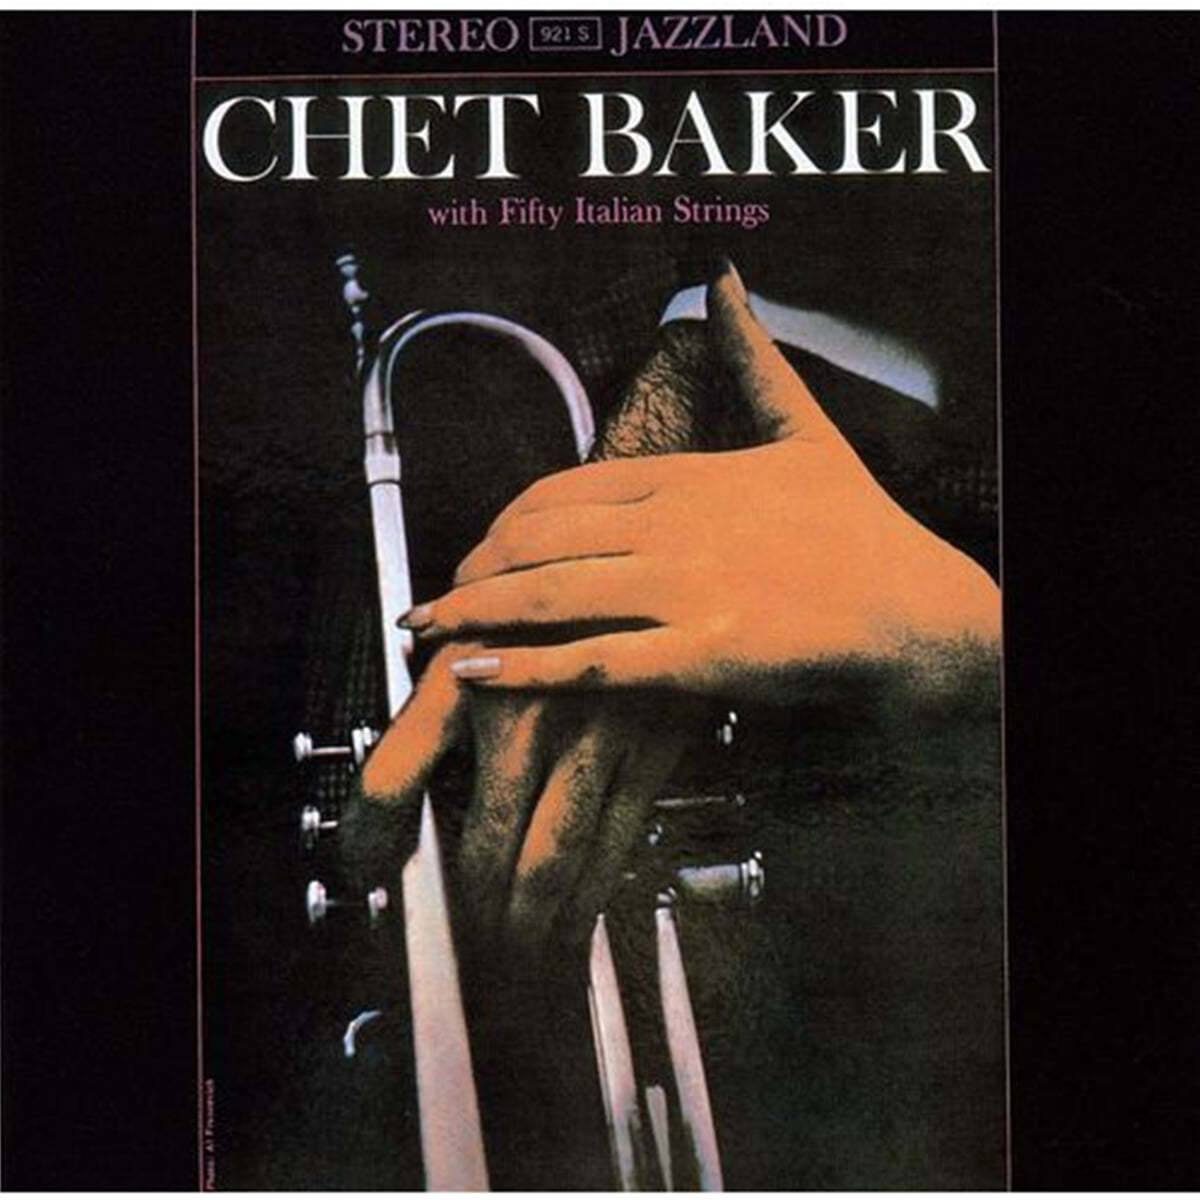 Chet Baker - with Fifty Italian Strings